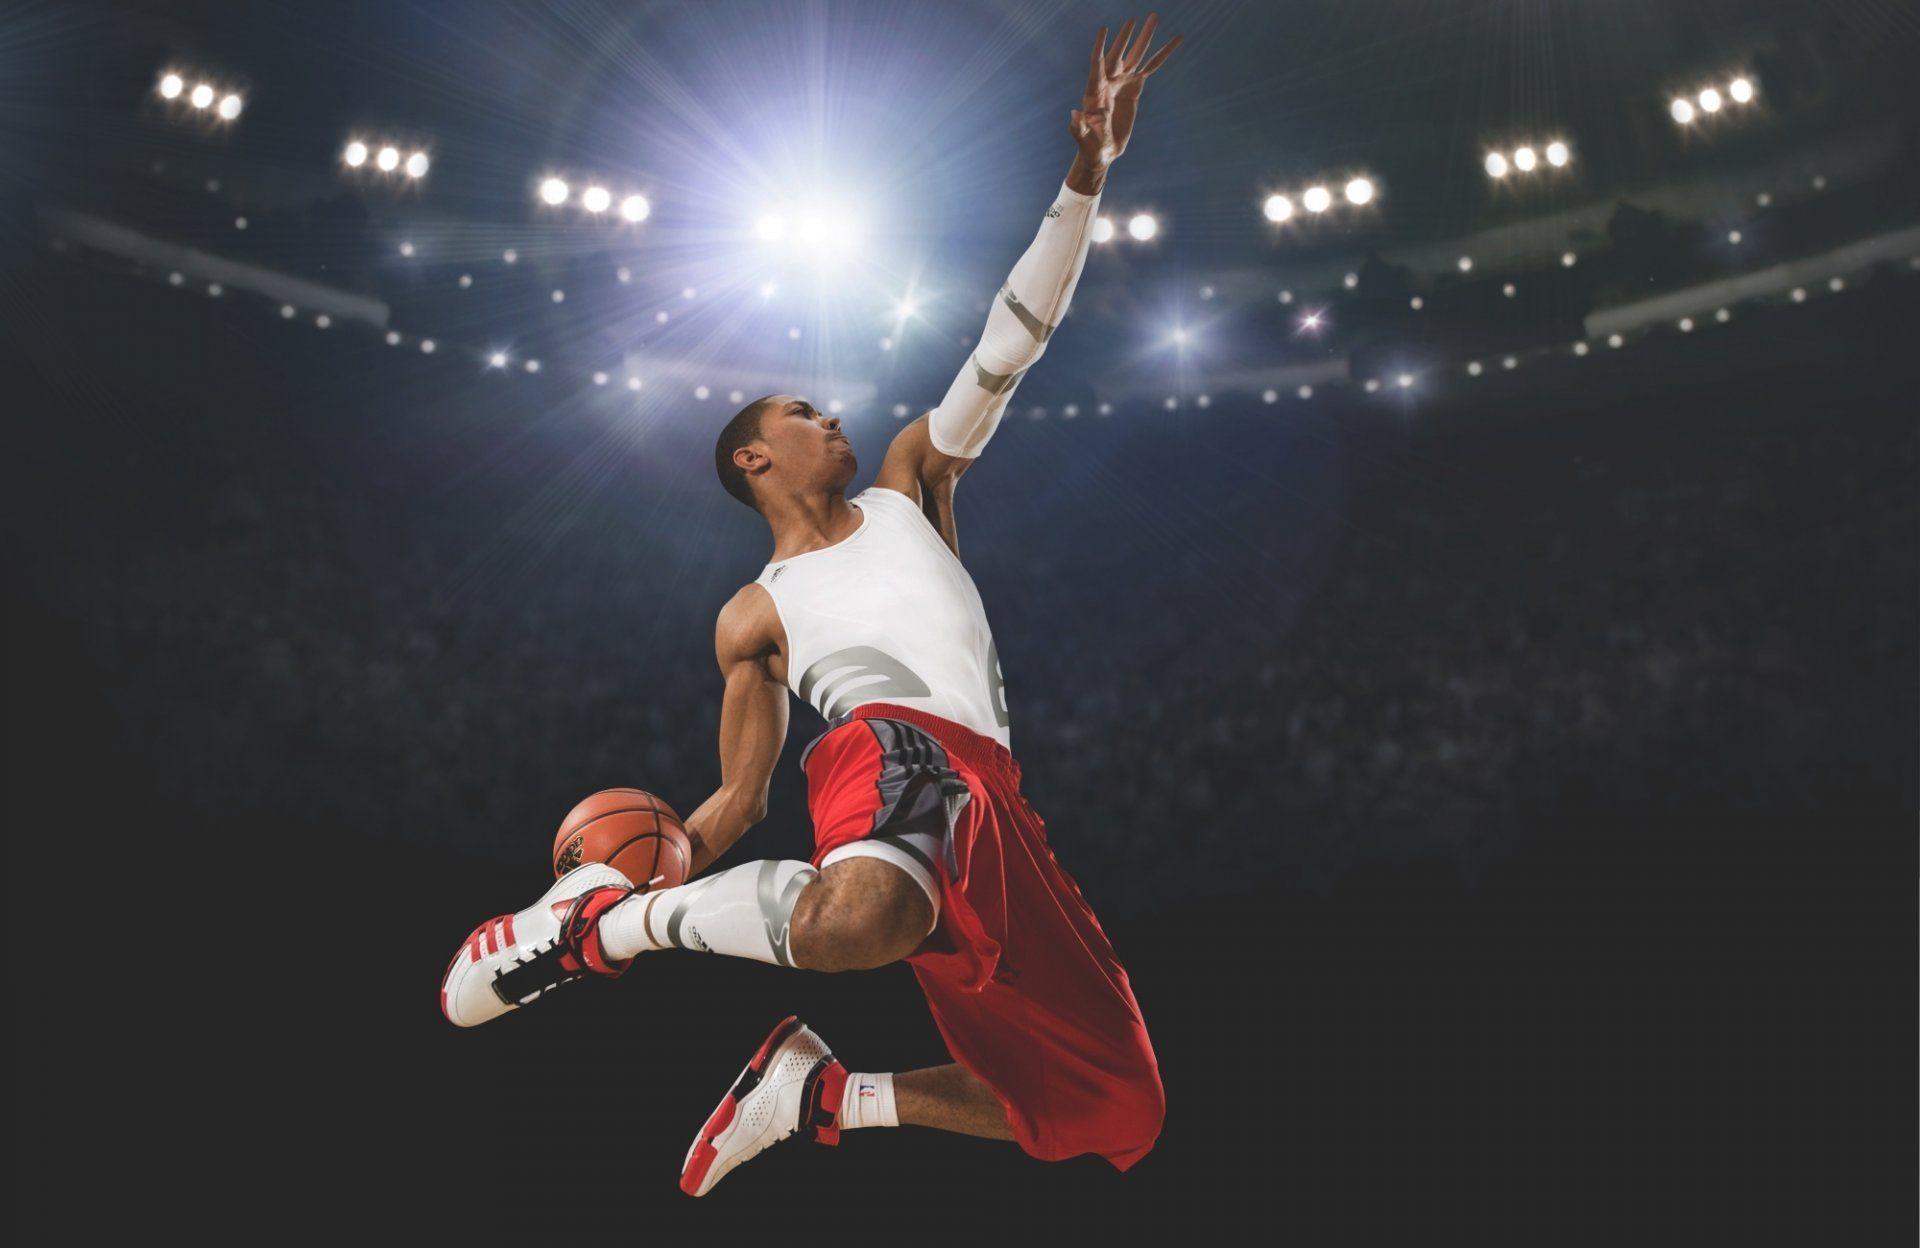 derrick rose basketball player ball hang slam dunk adidas stadium